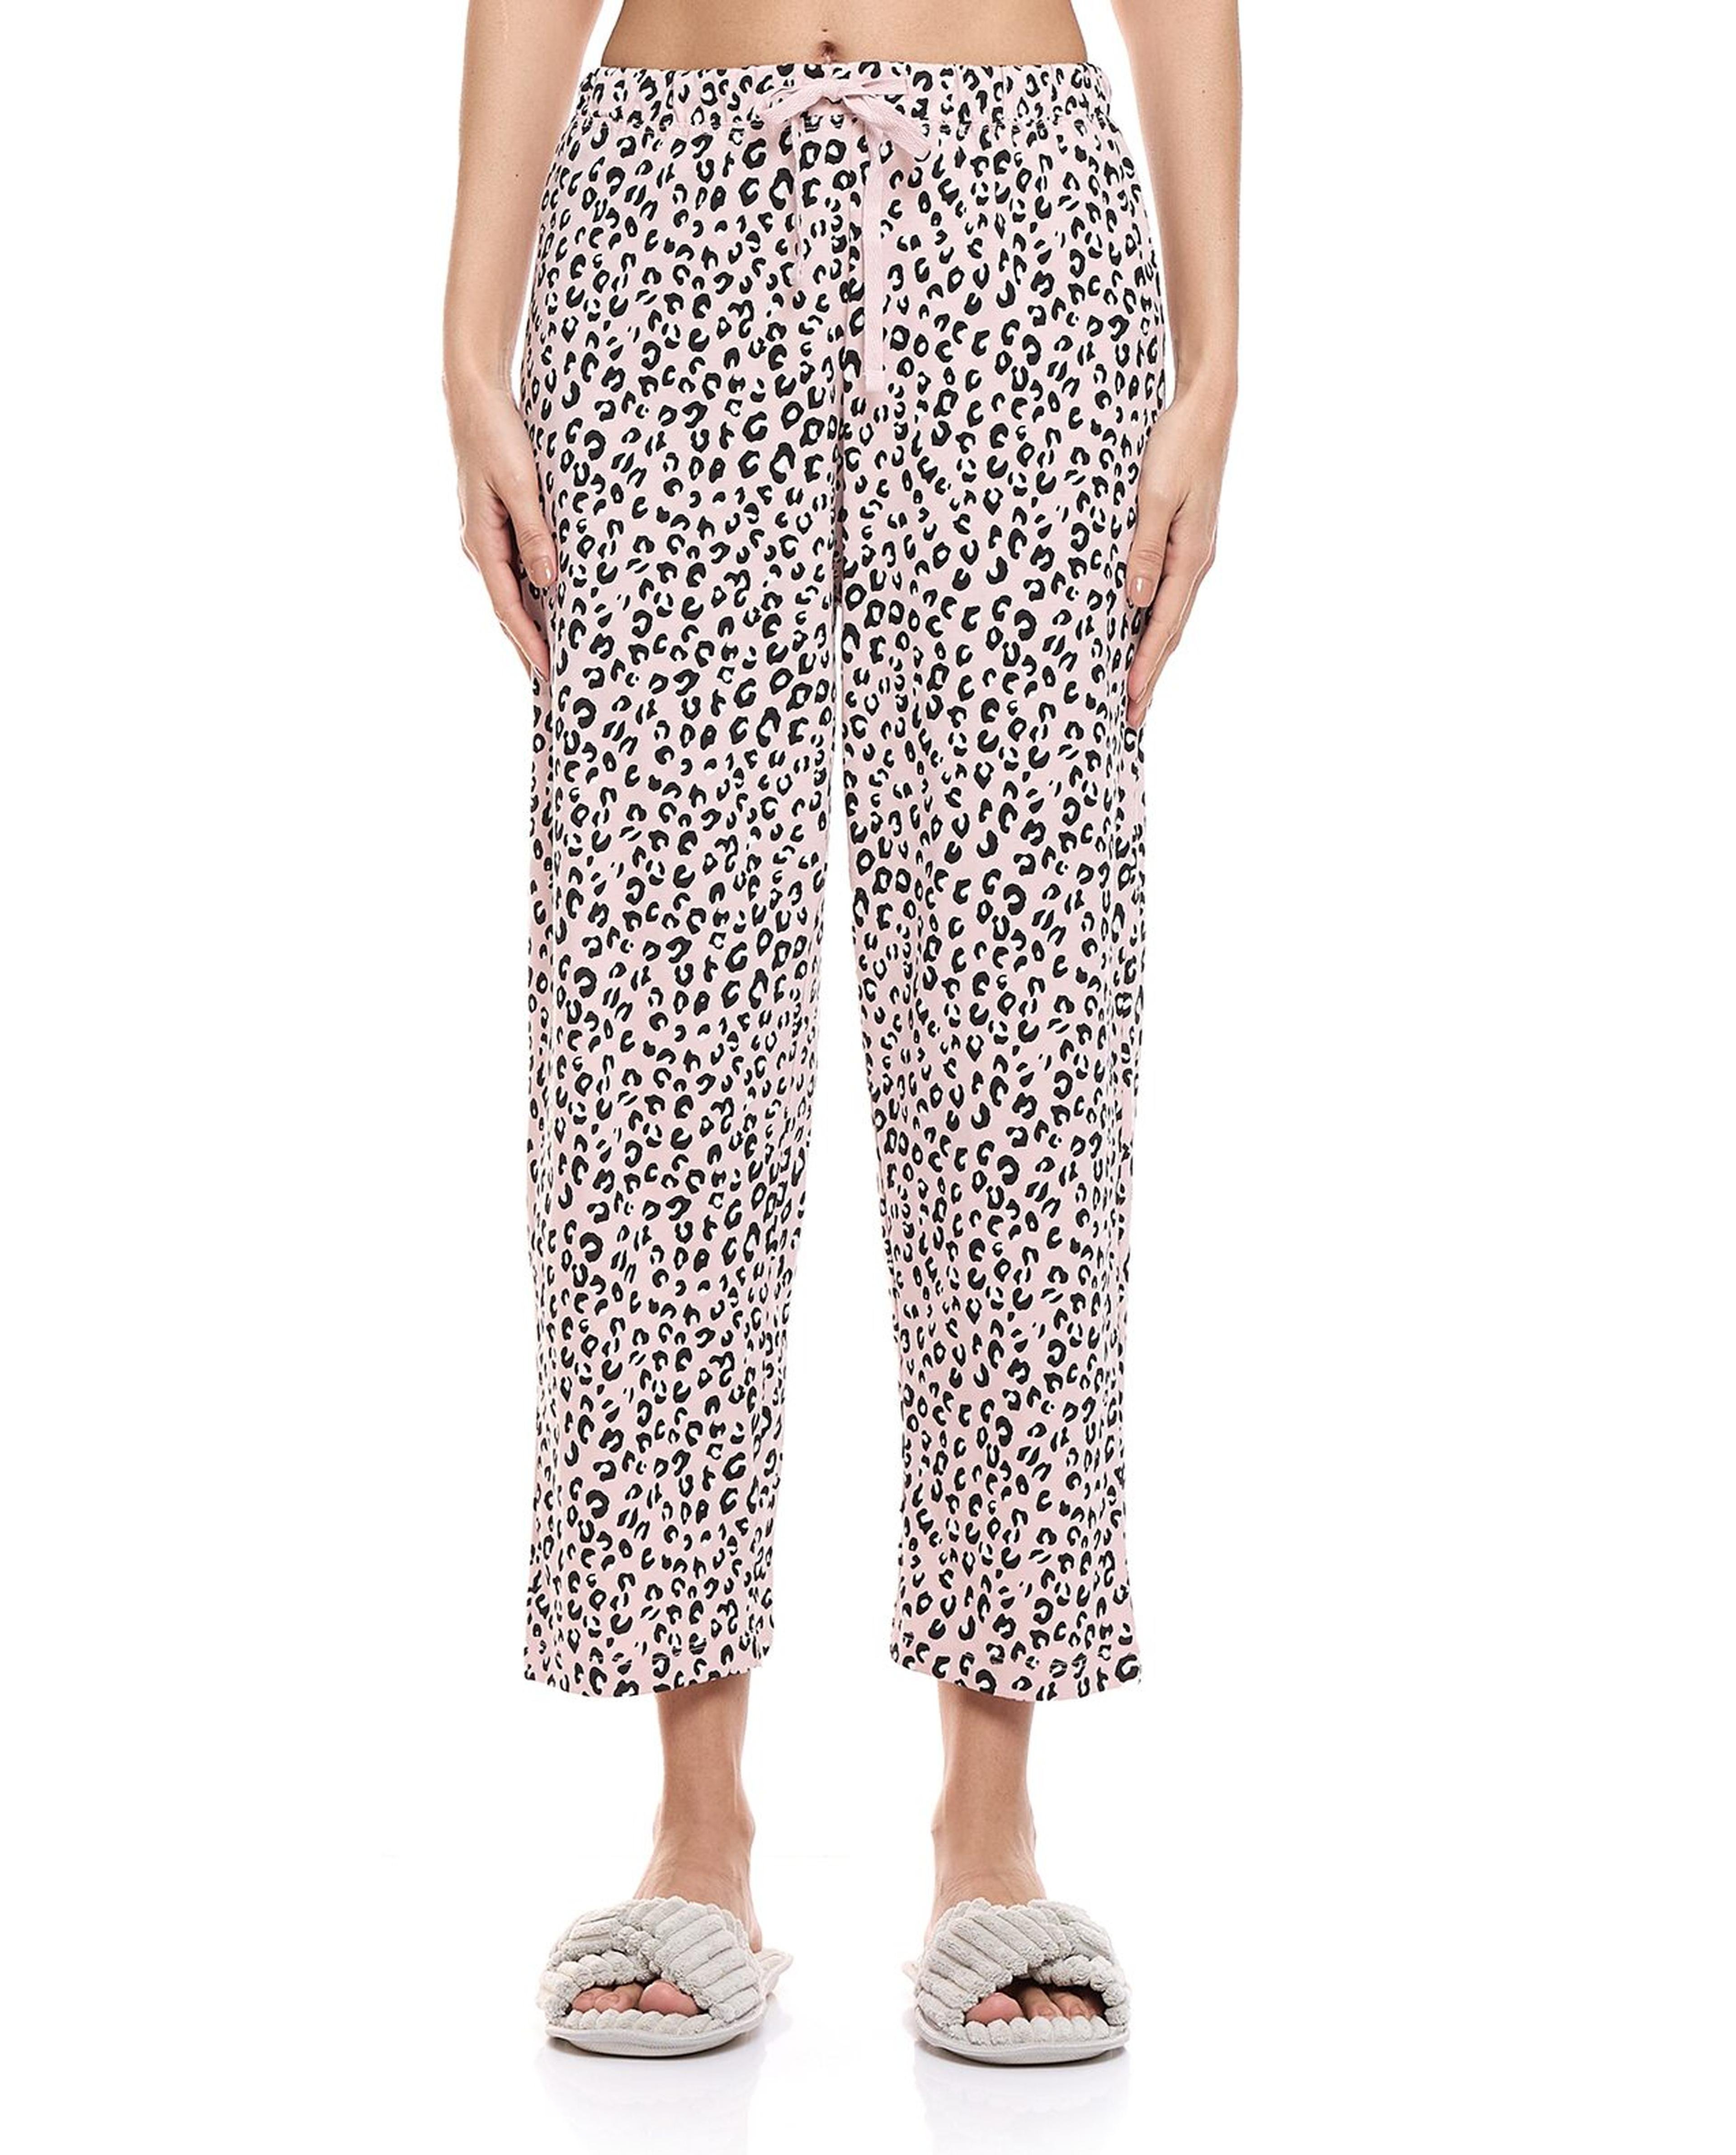 Animal Printed Short Sleeves Pajama Set